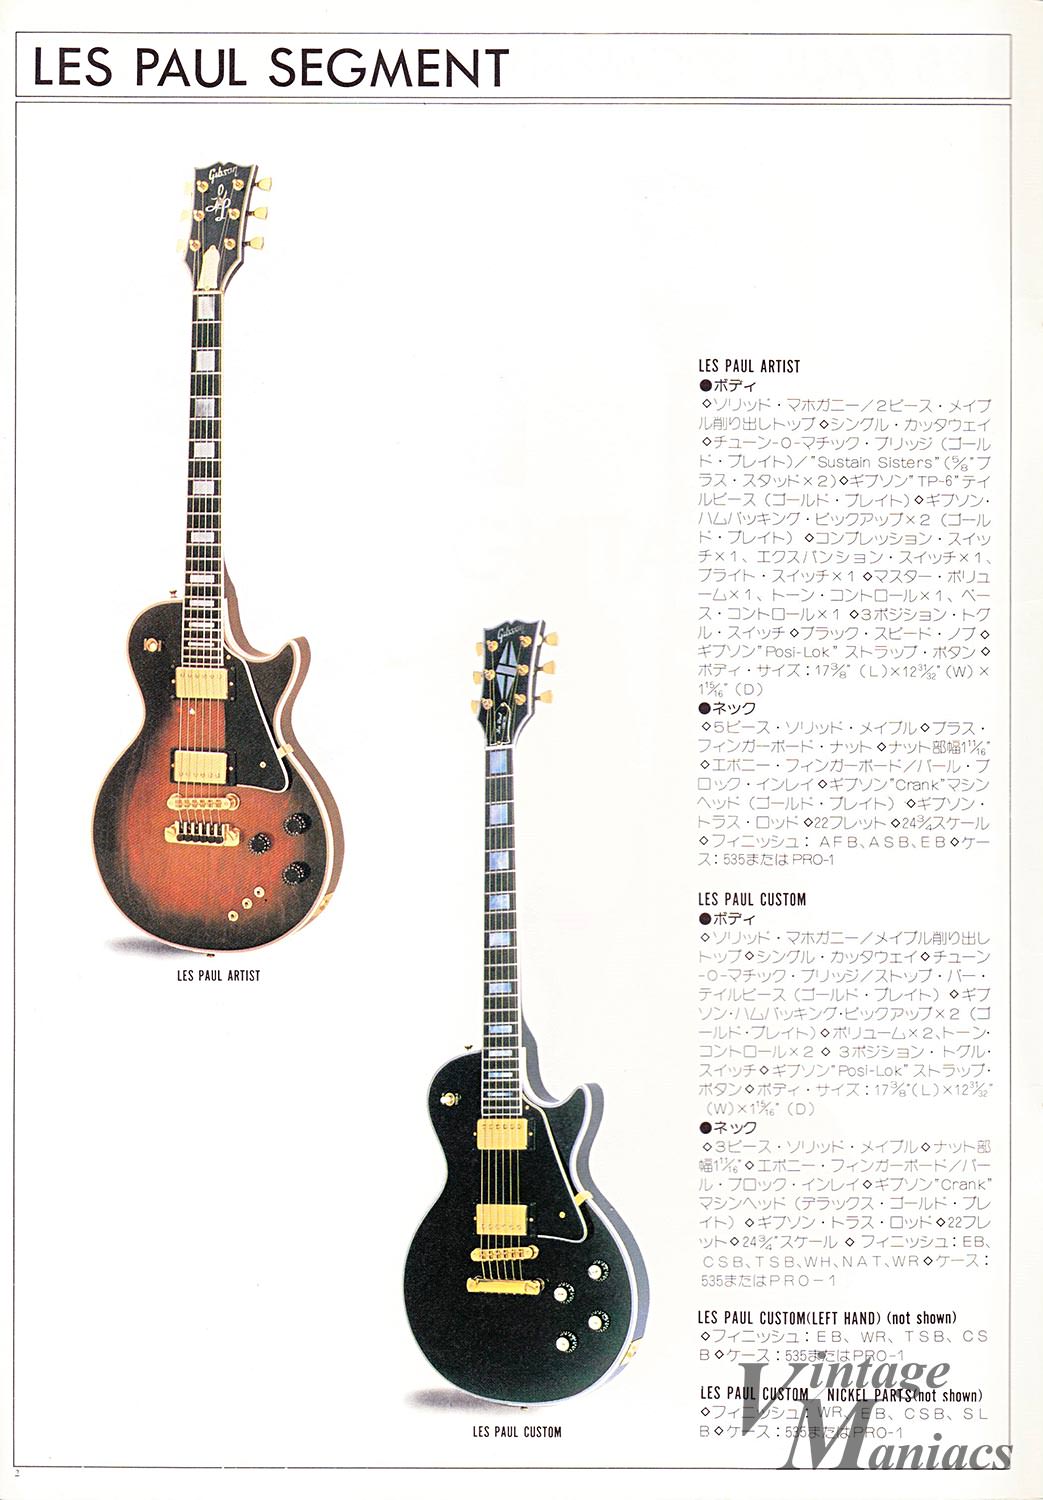 Gibsonカタログで見るFlyingV2とLes Paul Pro Deluxe | Vintage Maniacs